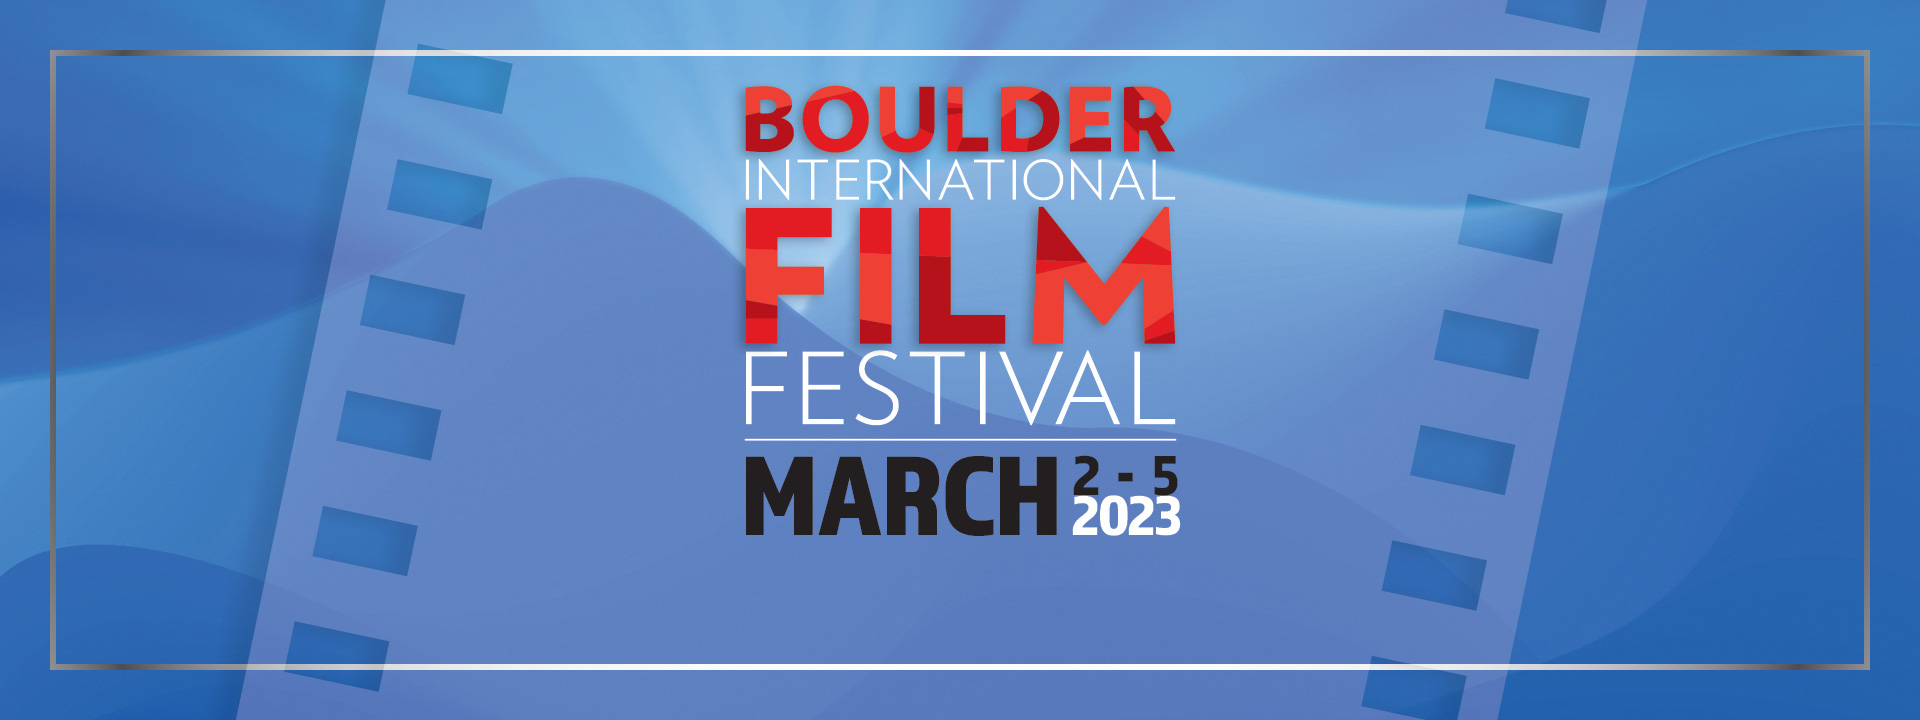 2023 Boulder International Film Festival